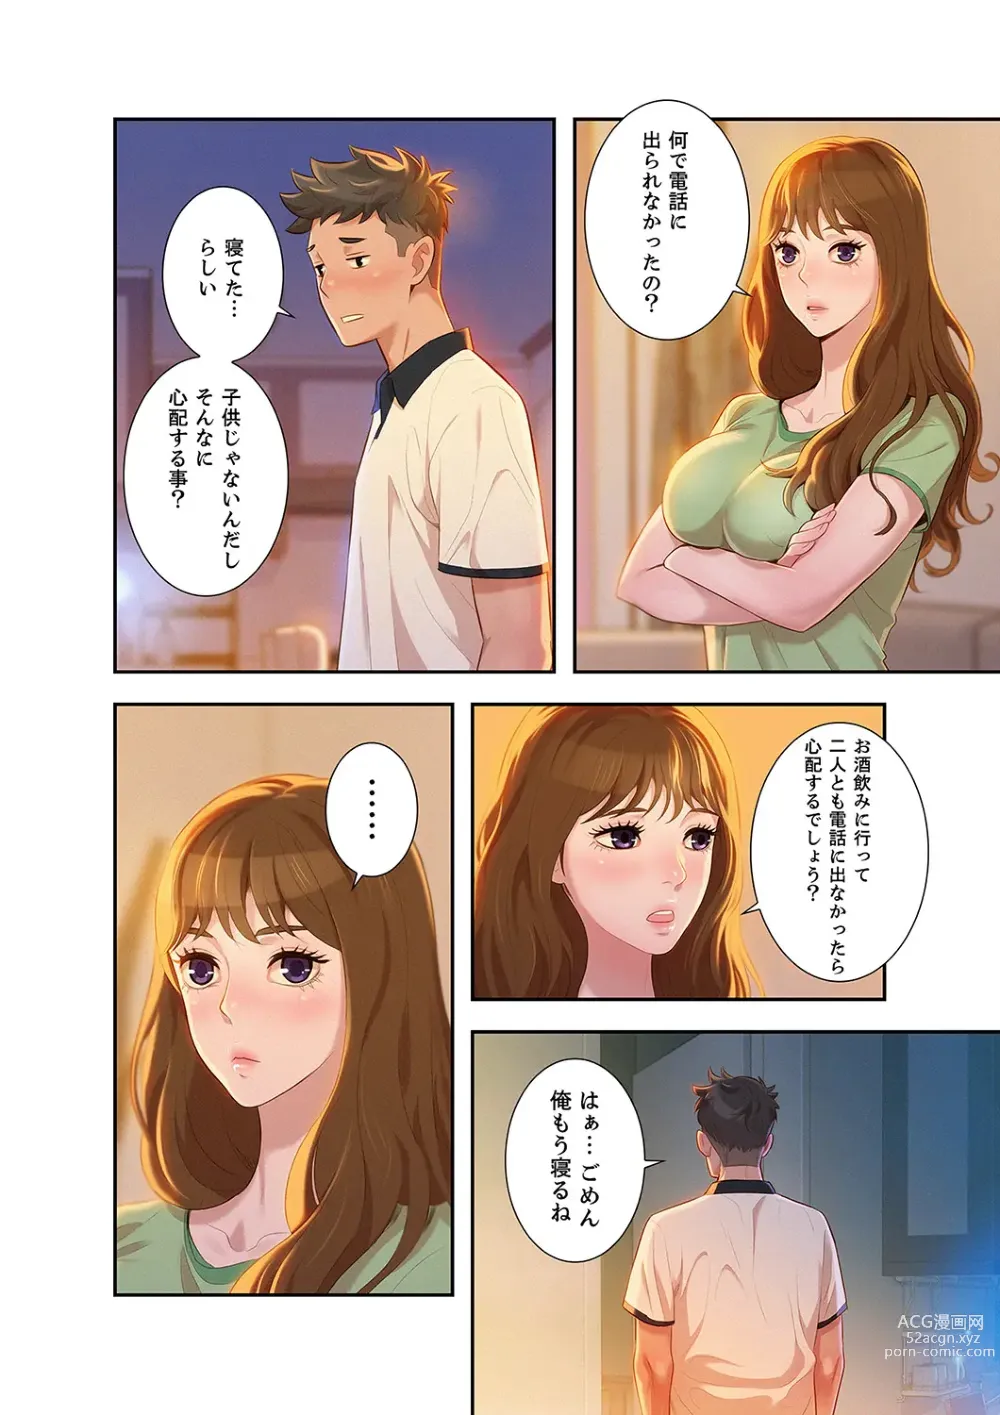 Page 146 of manga Uso to SeFrie 1